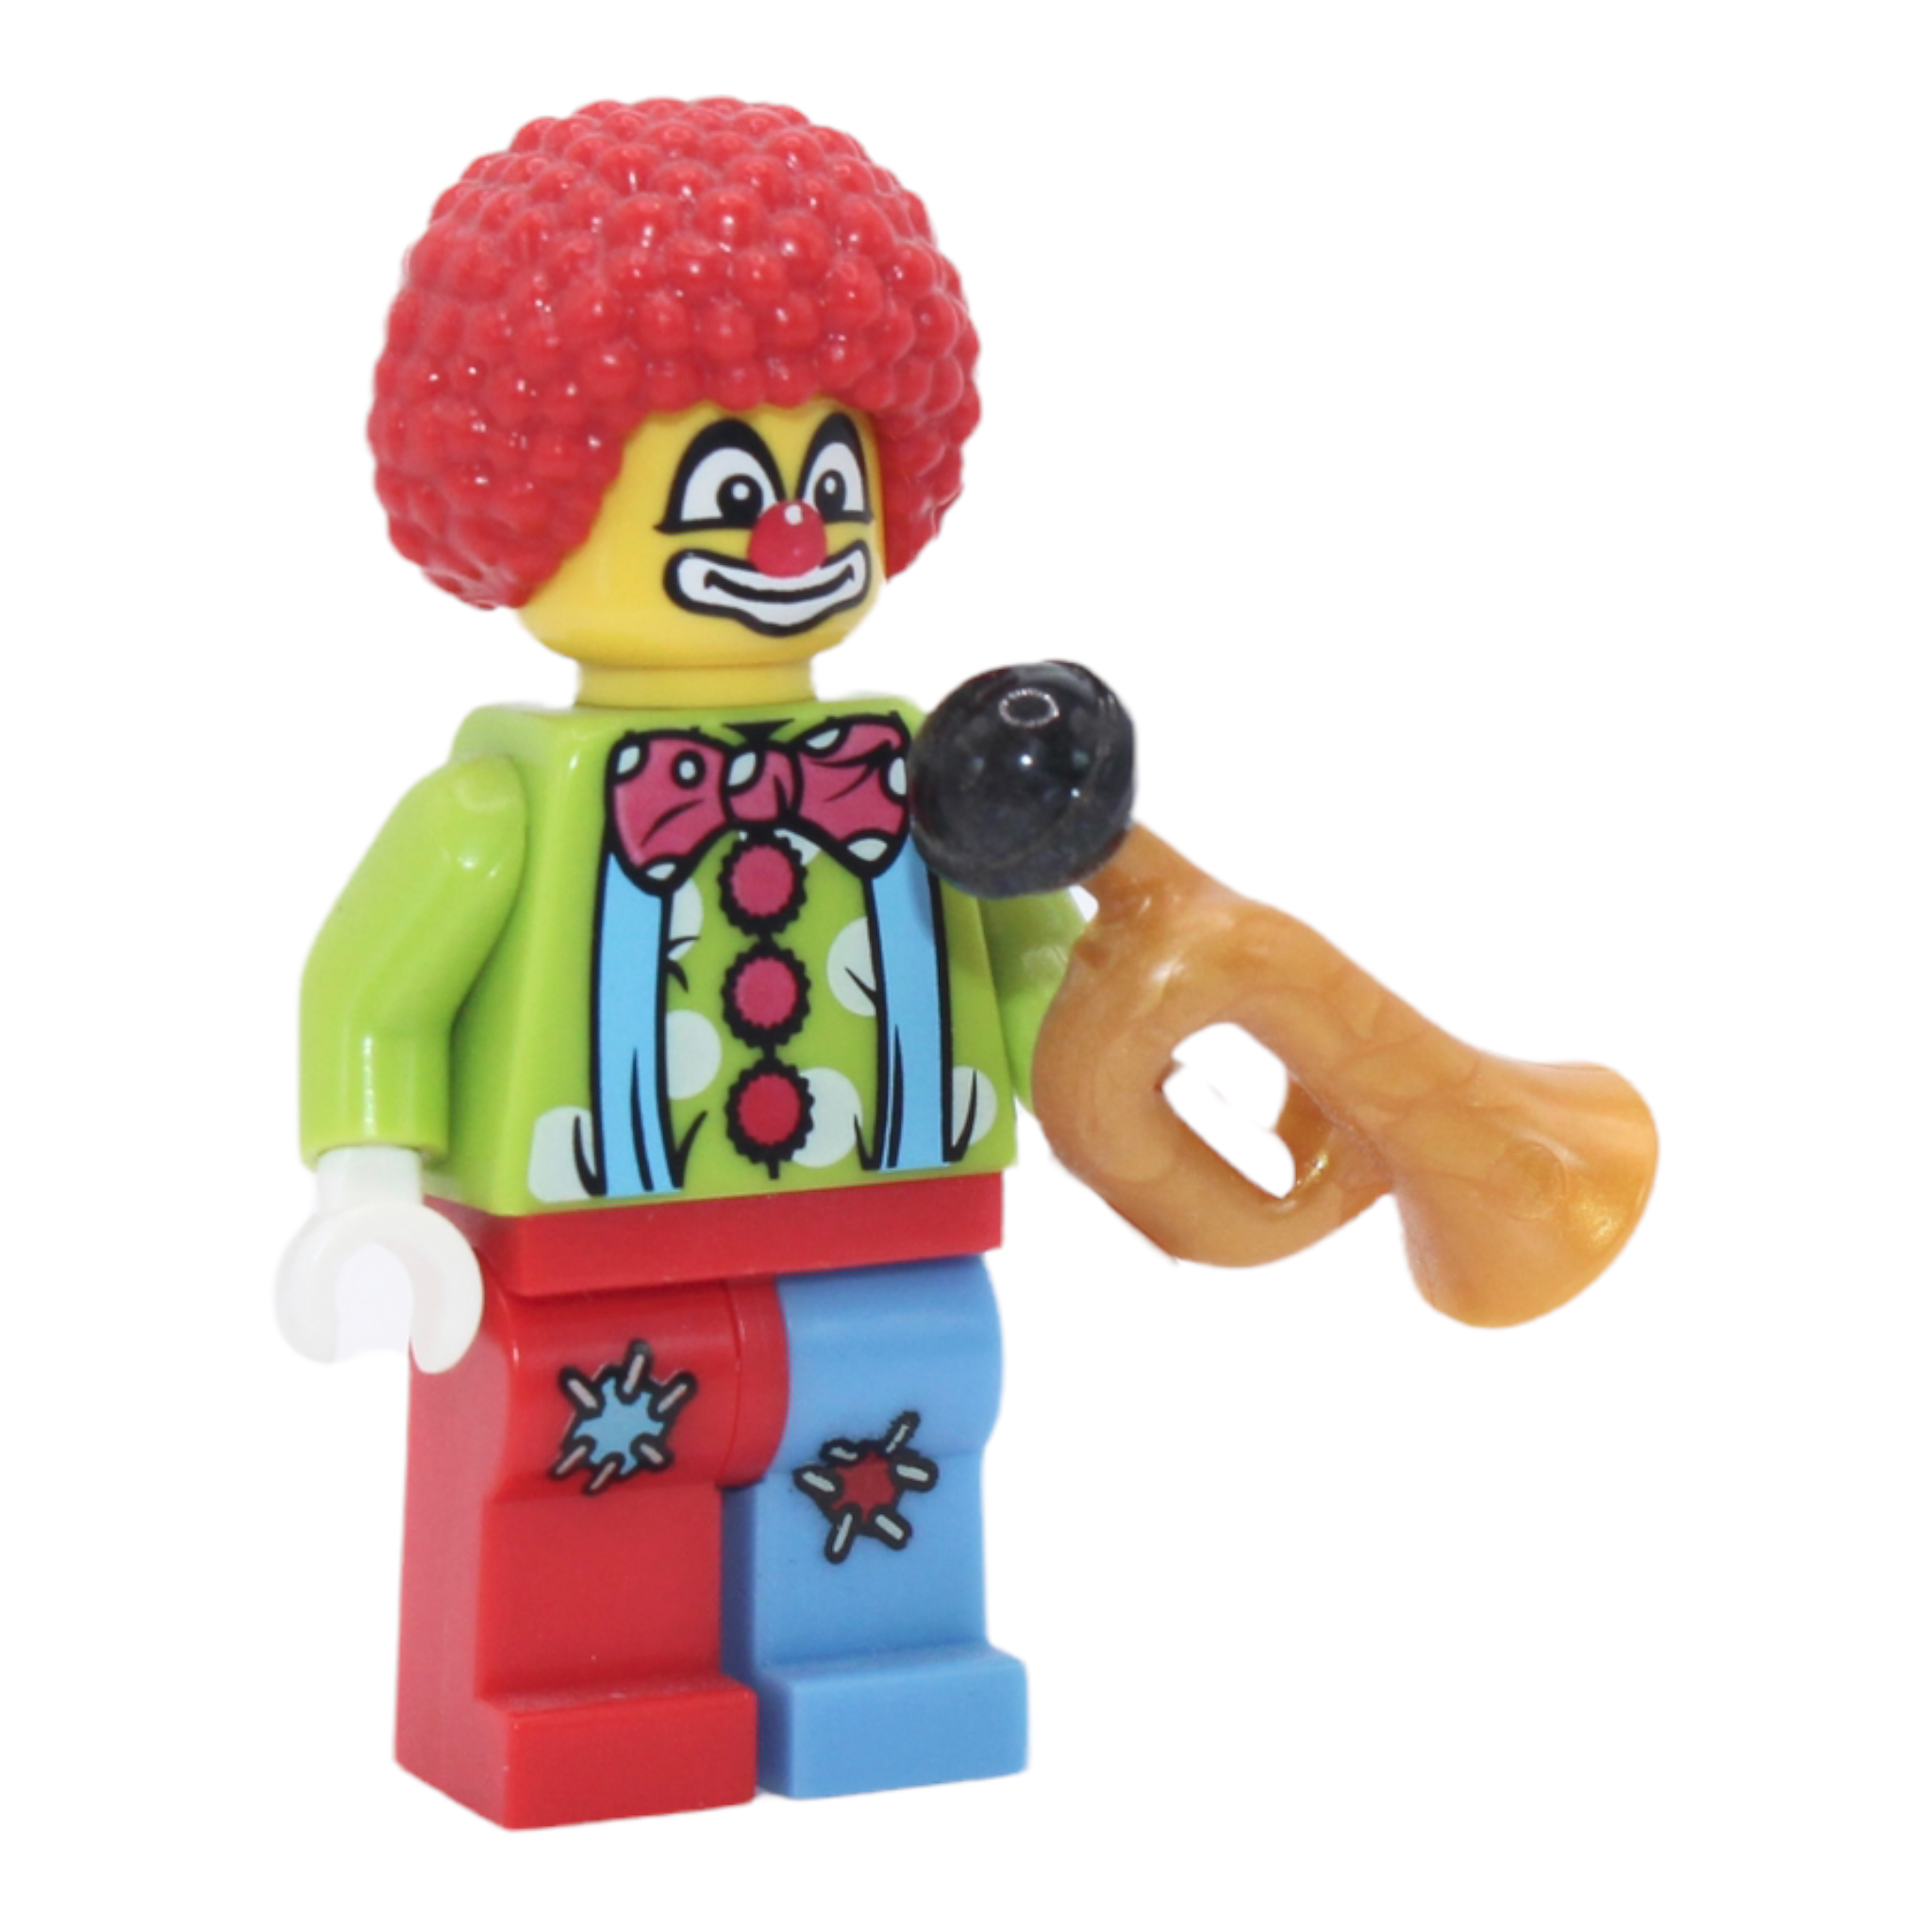 LEGO 1: Circus Clown